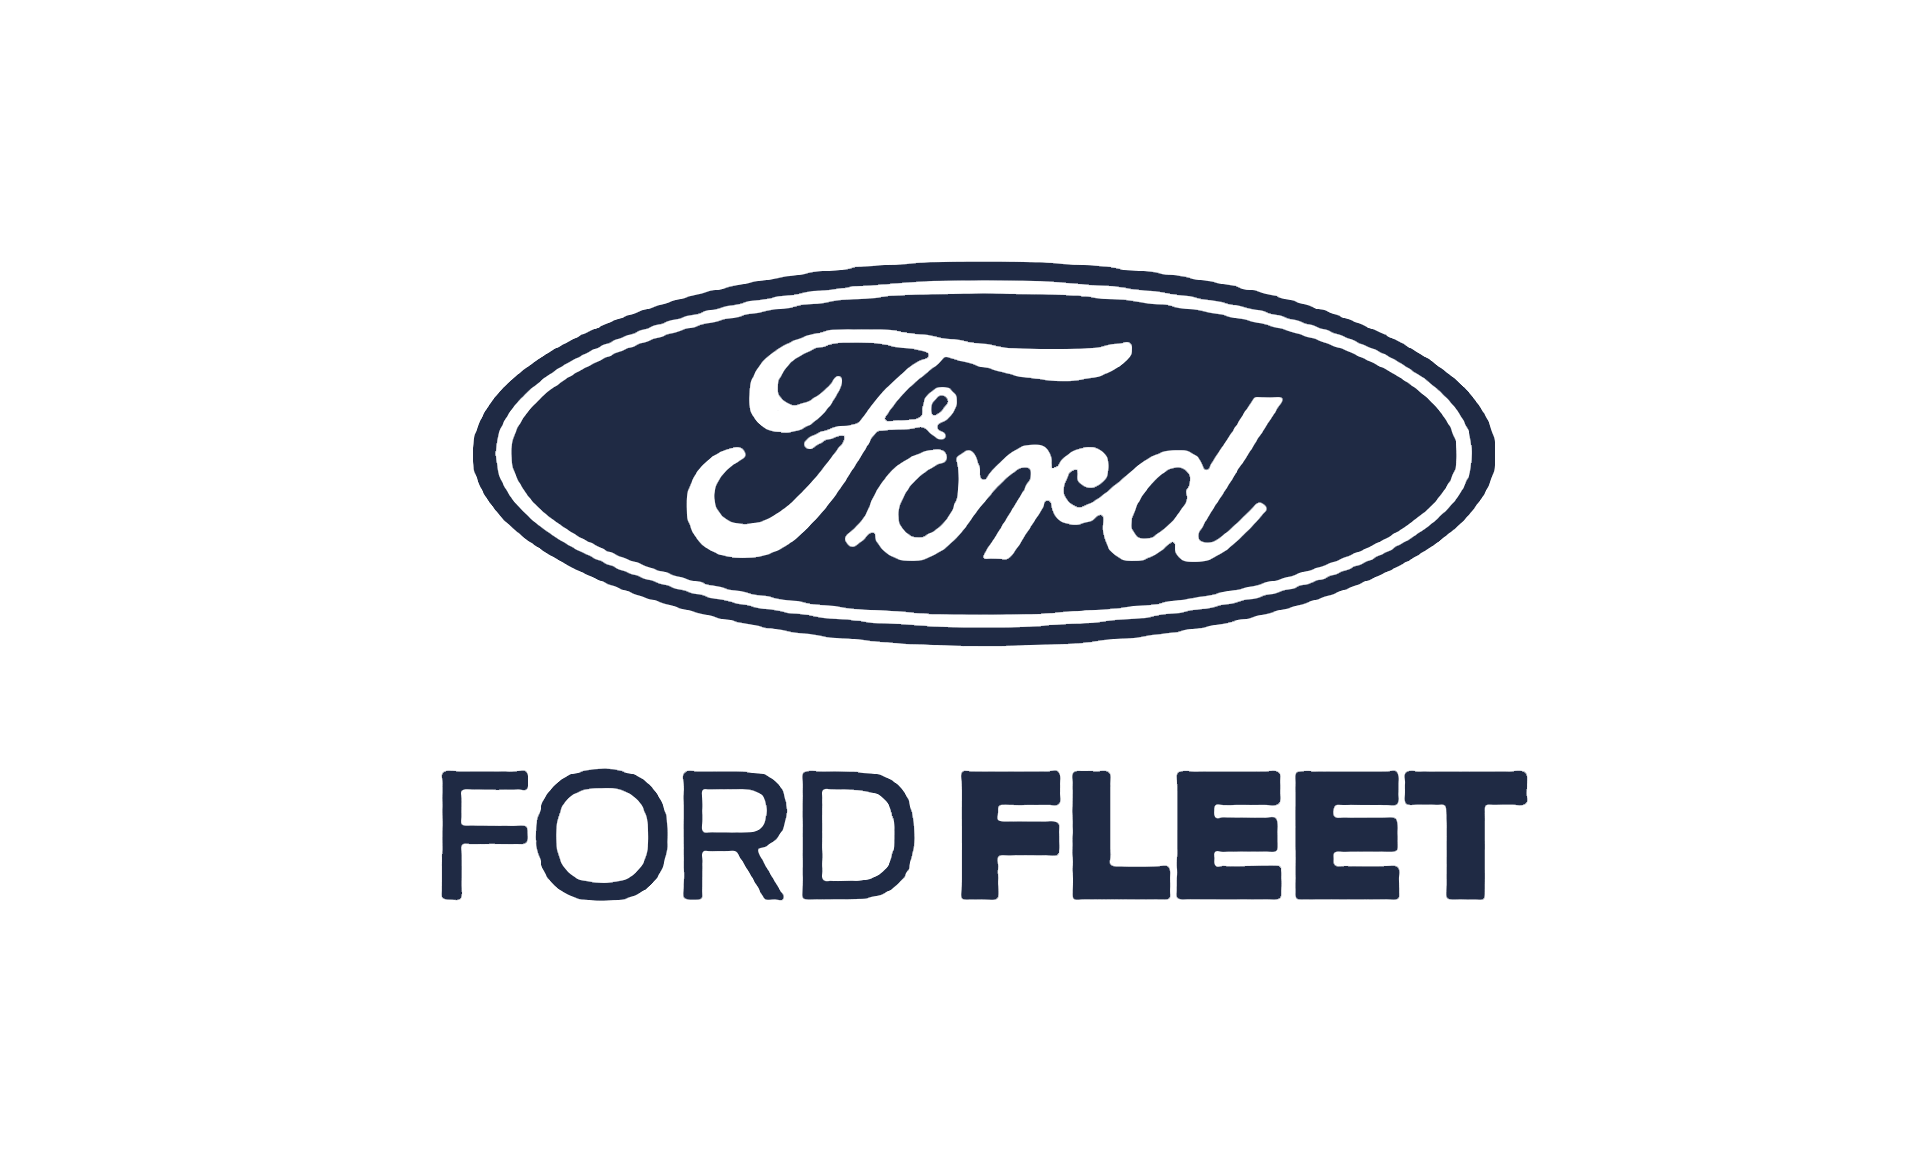 Ford Fleet